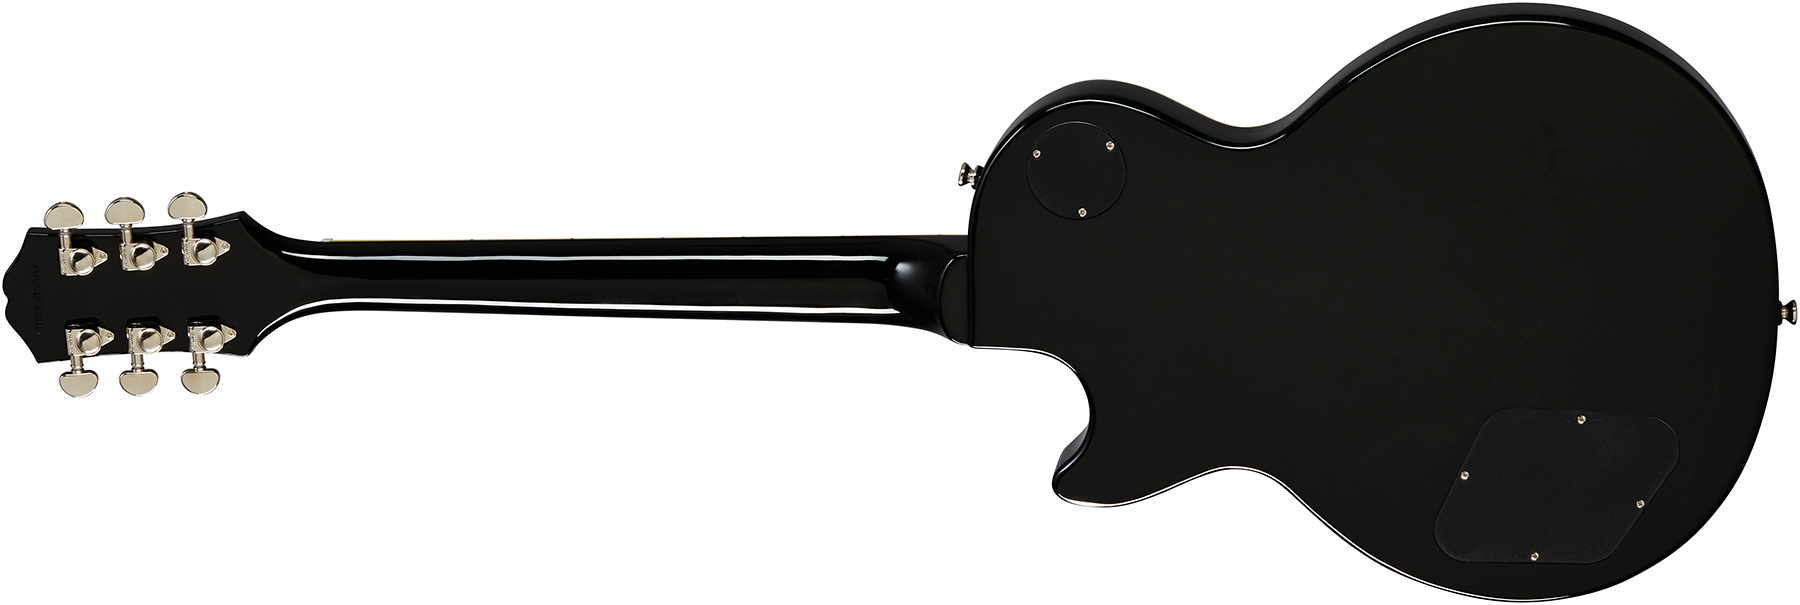 Epiphone Les Paul Standard 60s 2h Ht Rw - Ebony - Enkel gesneden elektrische gitaar - Variation 1